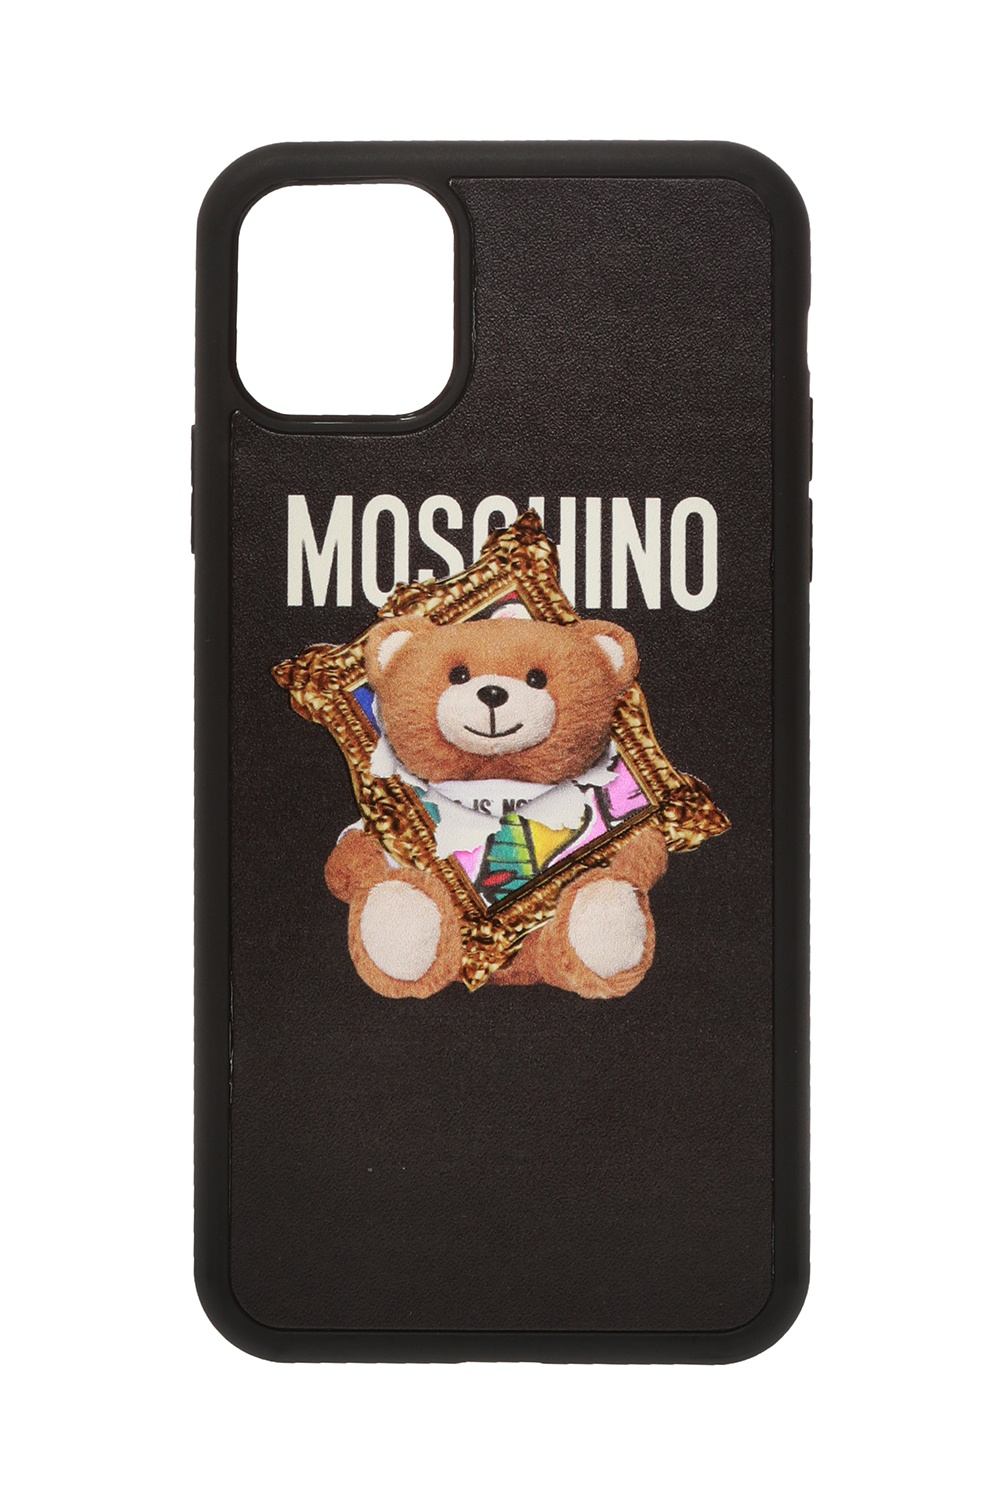 √70以上 moschino iphone 12 case 237299-Moschino iphone 12 mini case